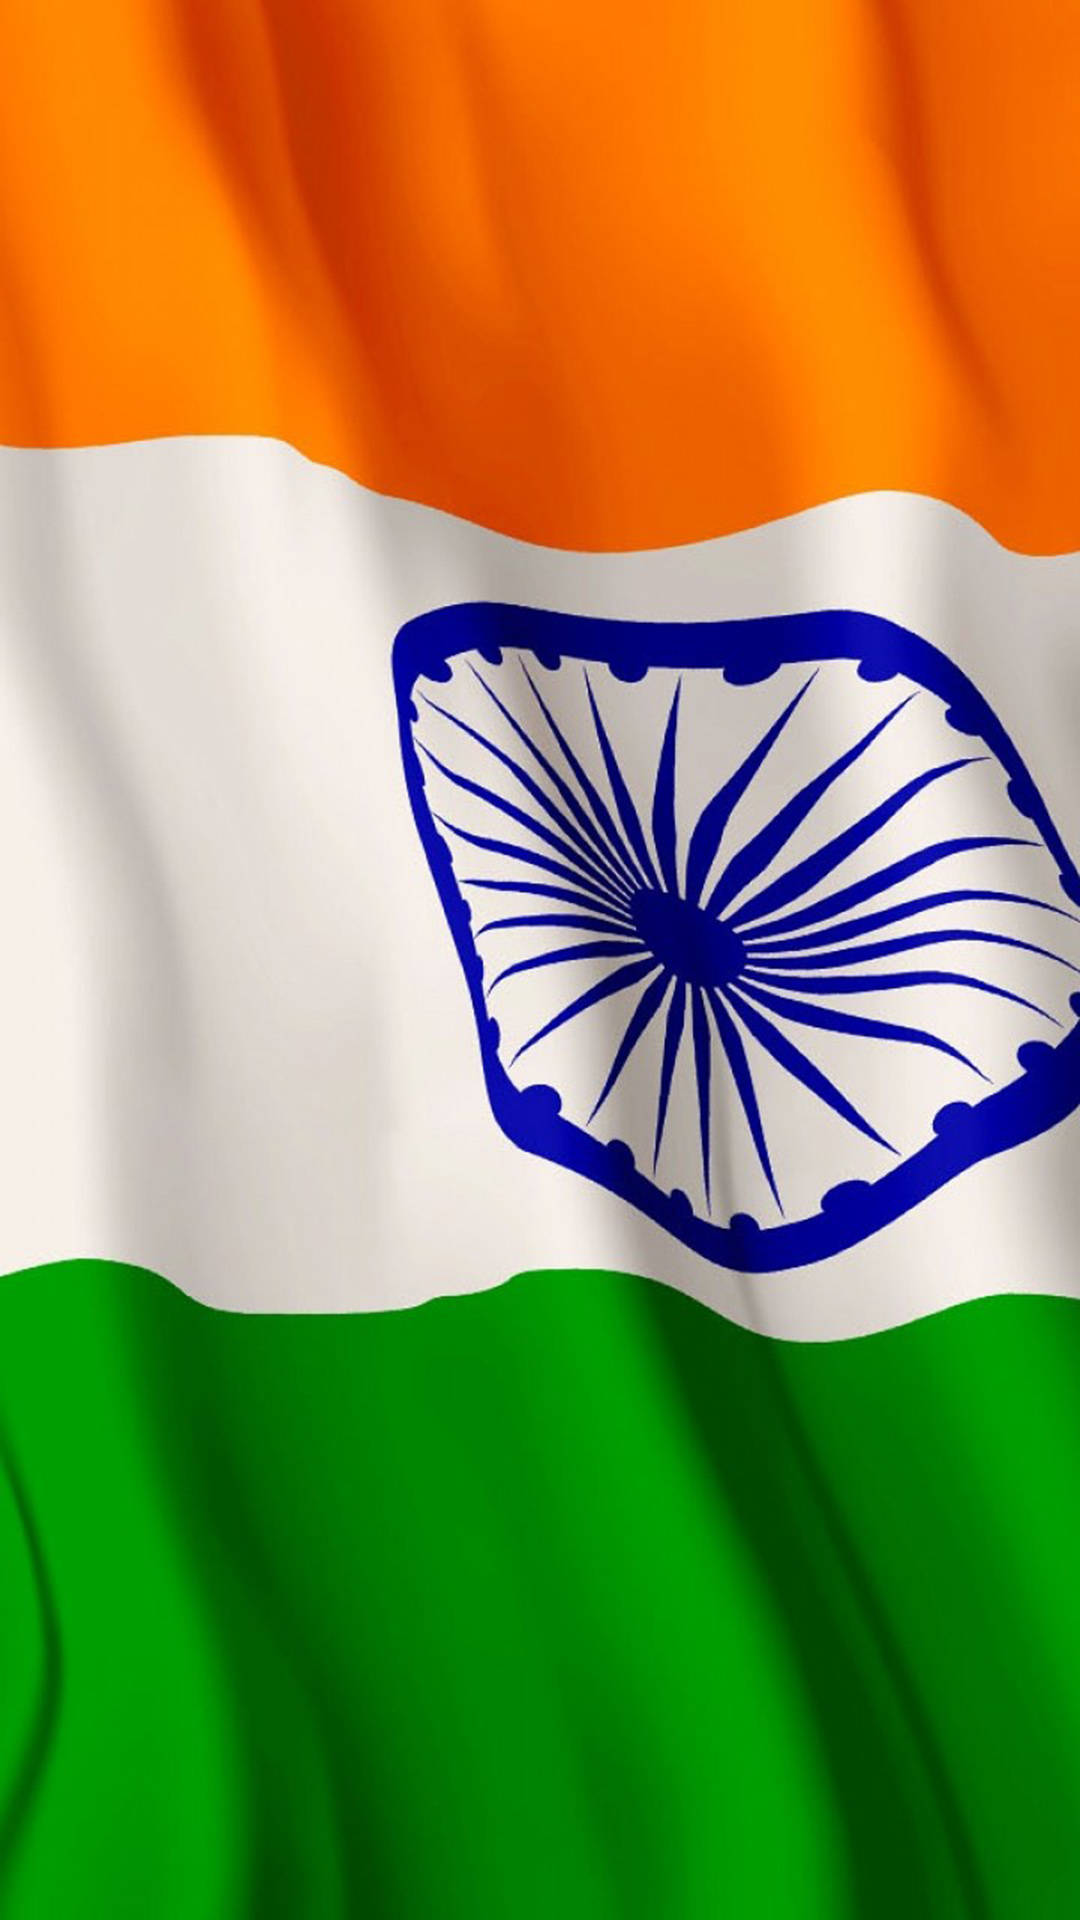 Fondode Pantalla Ondulante De La Bandera De India Para Móviles. Fondo de pantalla